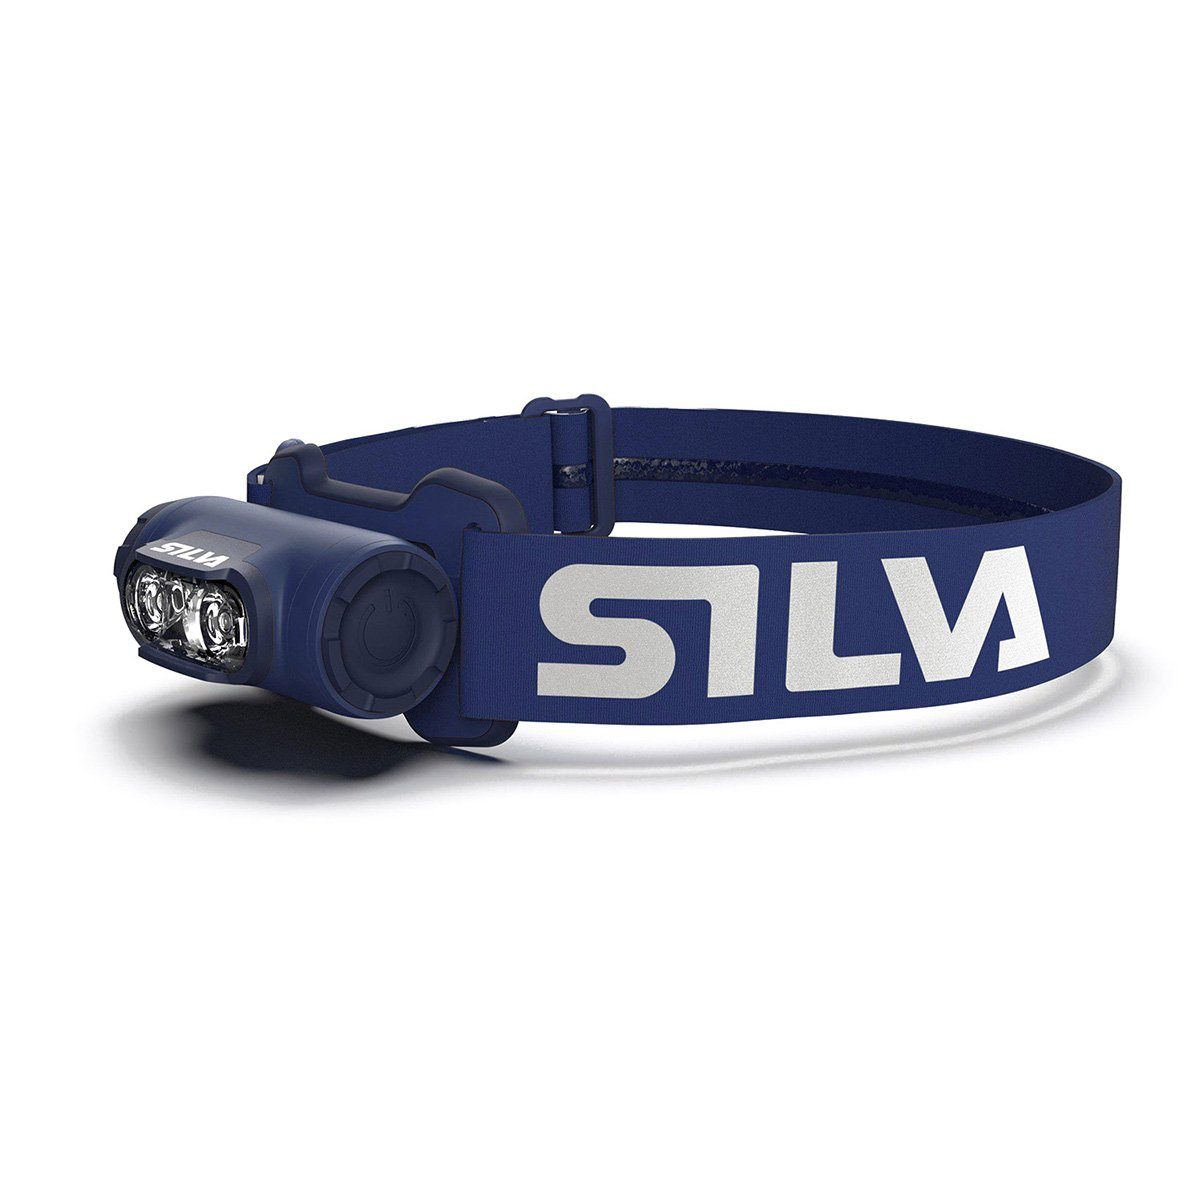 Silva LED Stirnlampe »Explore 4 blau LED Stirnlampe 400 Lumen«